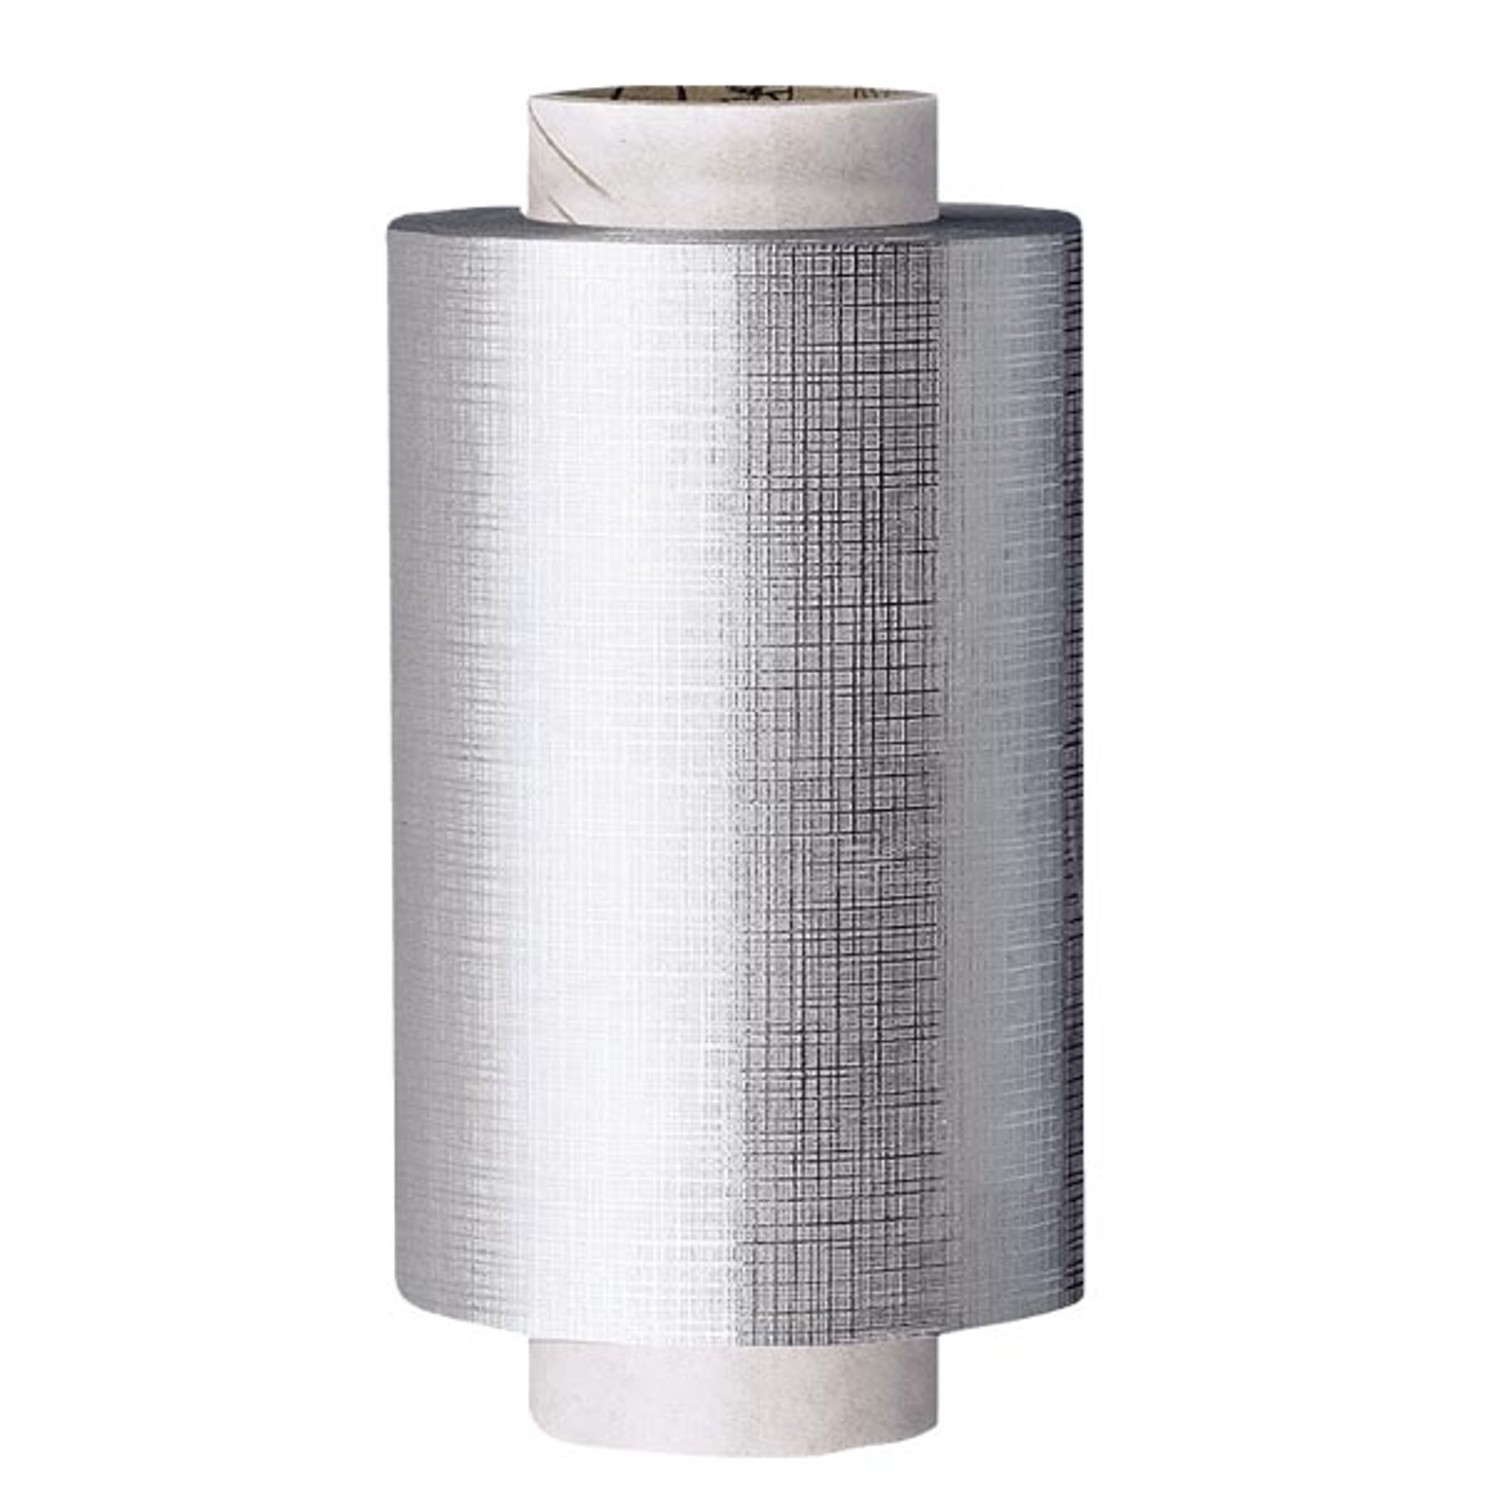 Fripac-Medis Aluminium Haarfolie 'Super Plus' 15my Silber 12 cm x 100 m